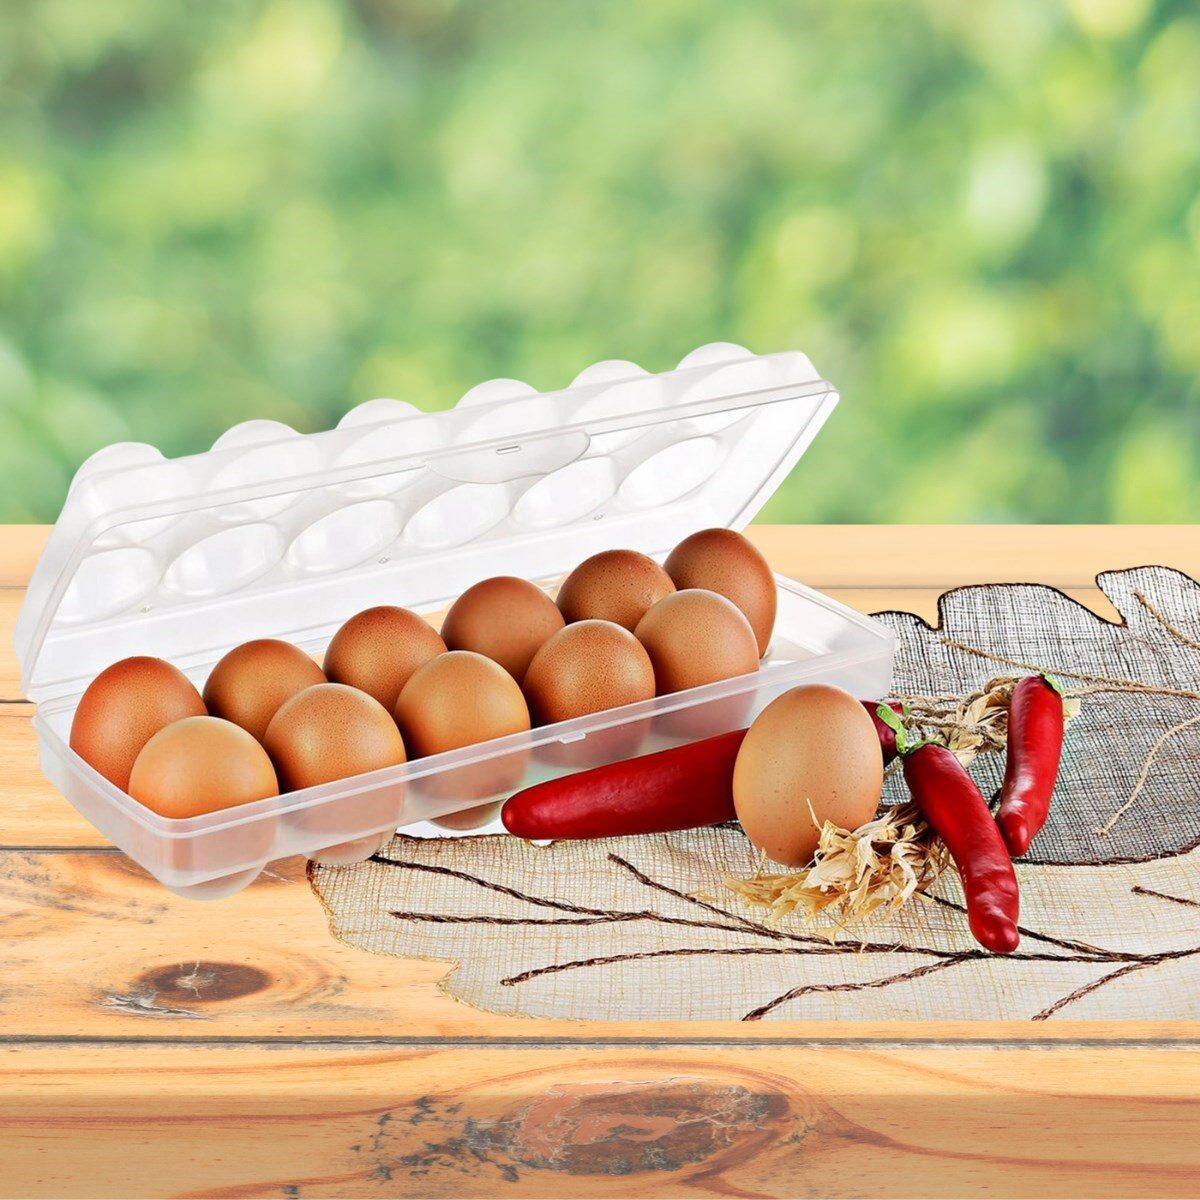 12&apos;li Şeffaf Kapaklı Kilitli Yumurta Saklama Kabı Kutusu Aparatı (4172)